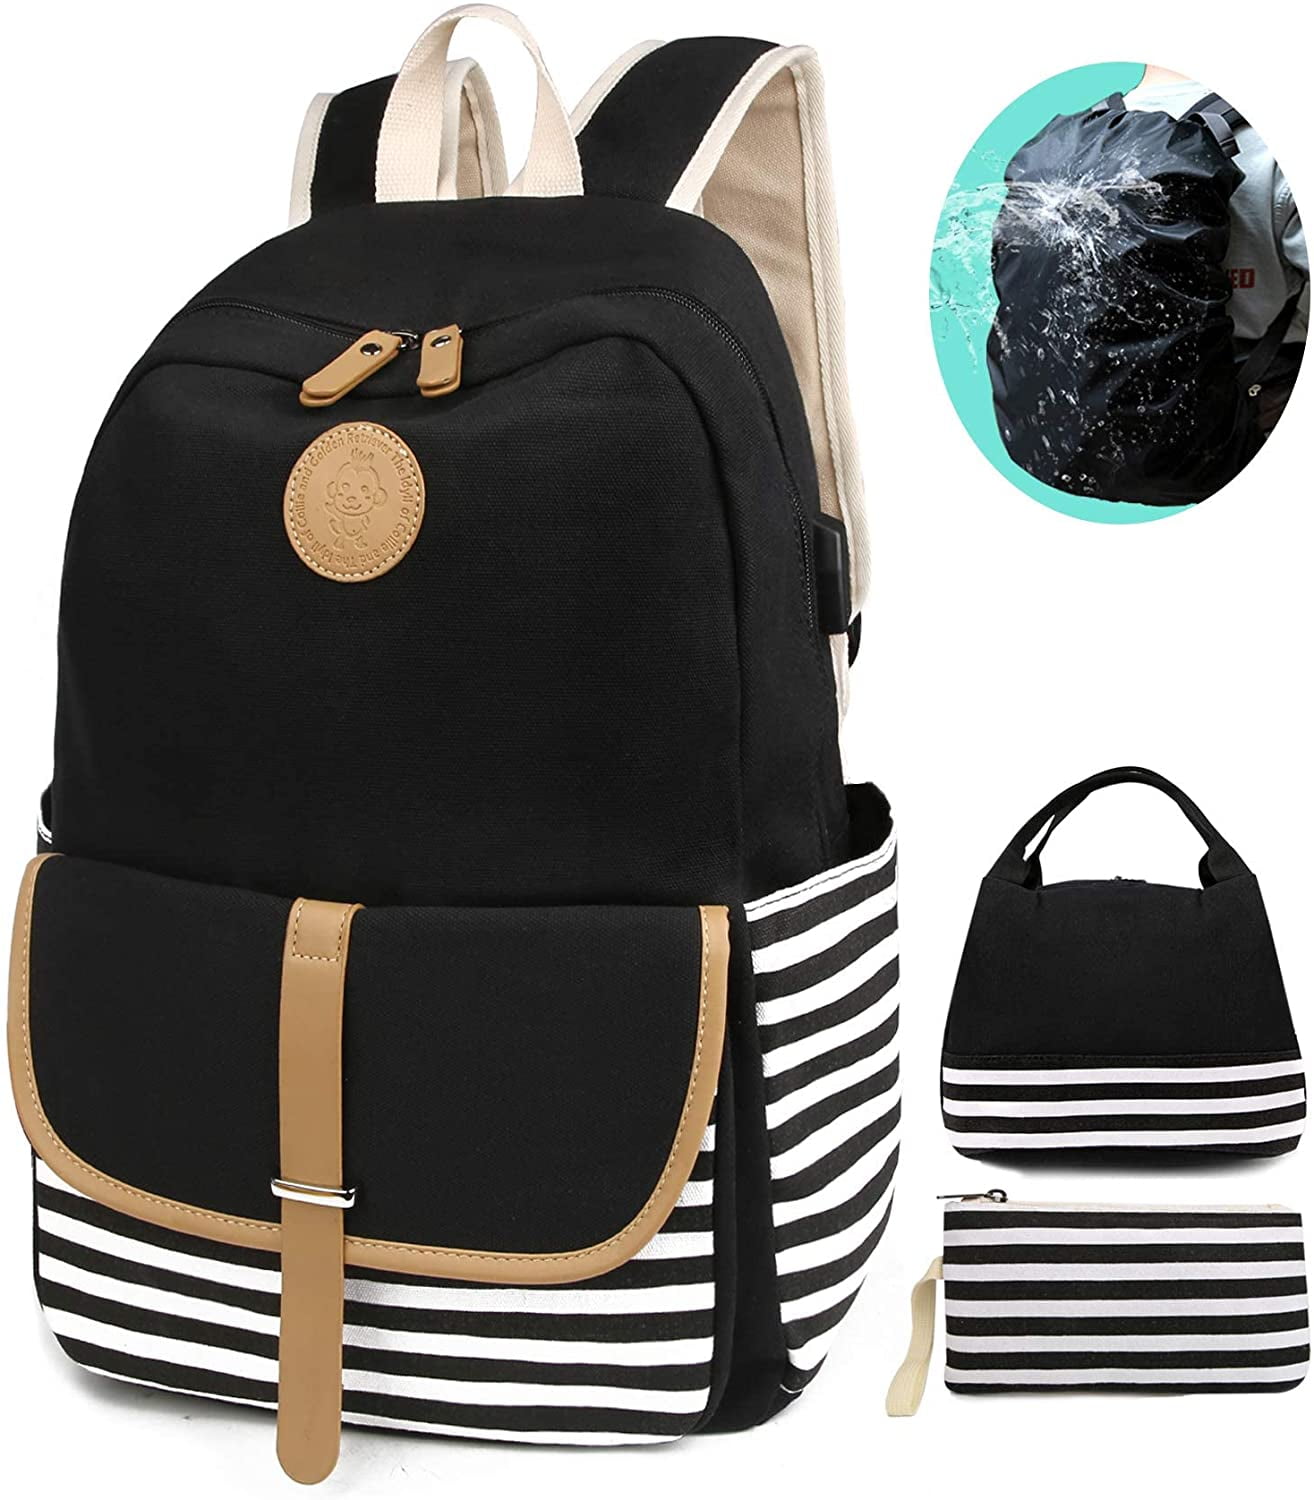 Barcelona 26 Ltr Waterproof School Bag I Travel Backpack I 15.6 inch laptop  Bag With Rain Cover